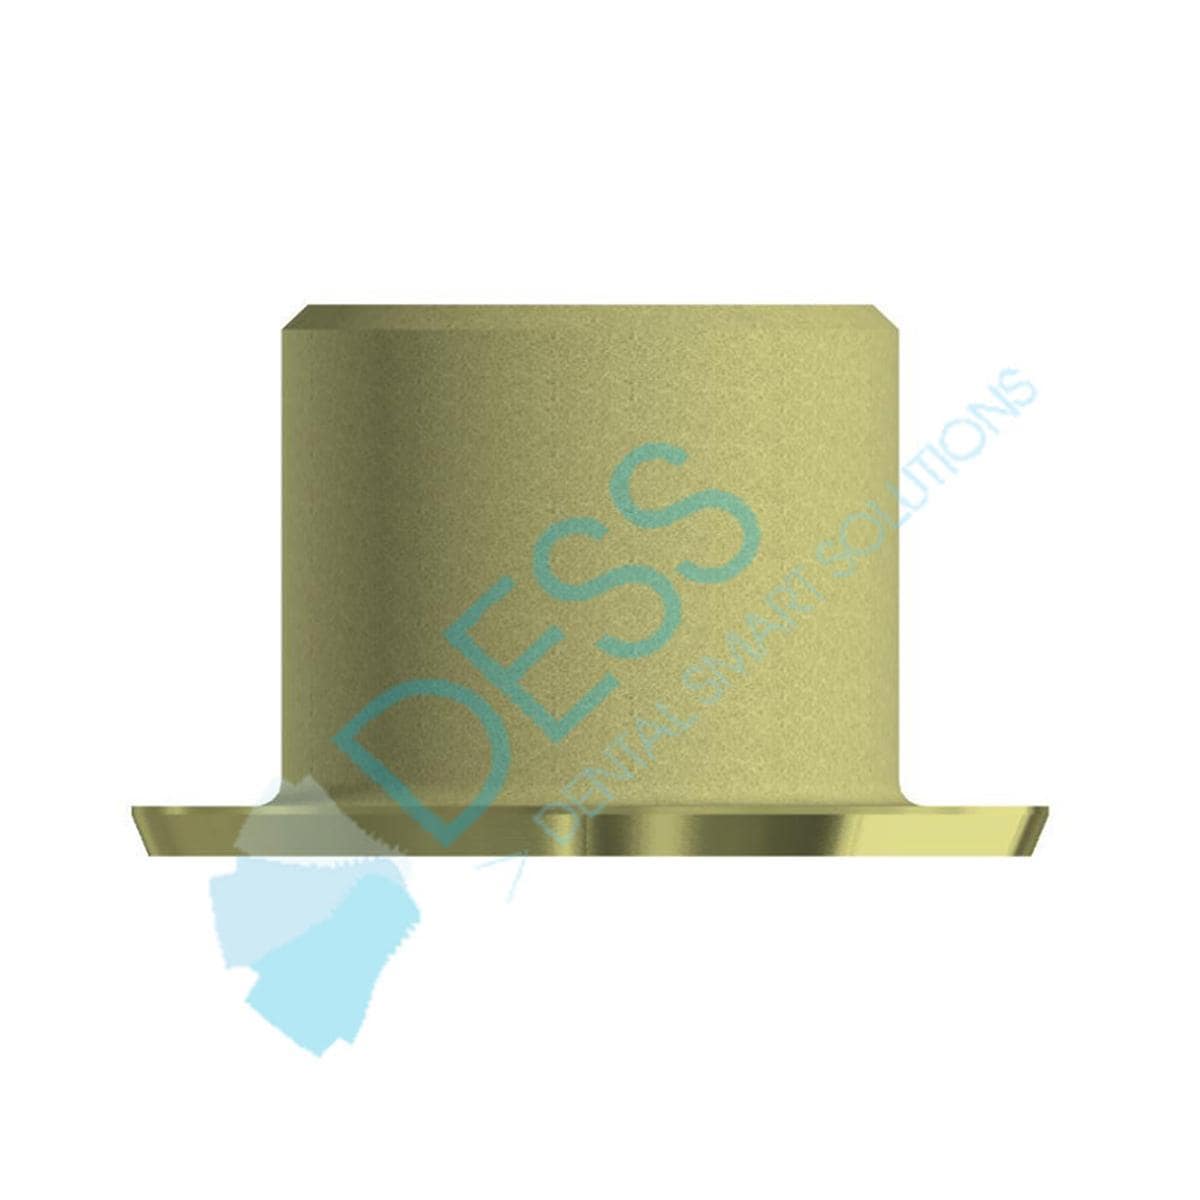 Titanbase DESS AURUMBase® - kompatibel mit 3i® Osseotite® - WP Ø 5,0 mm, ohne Rotationsschutz